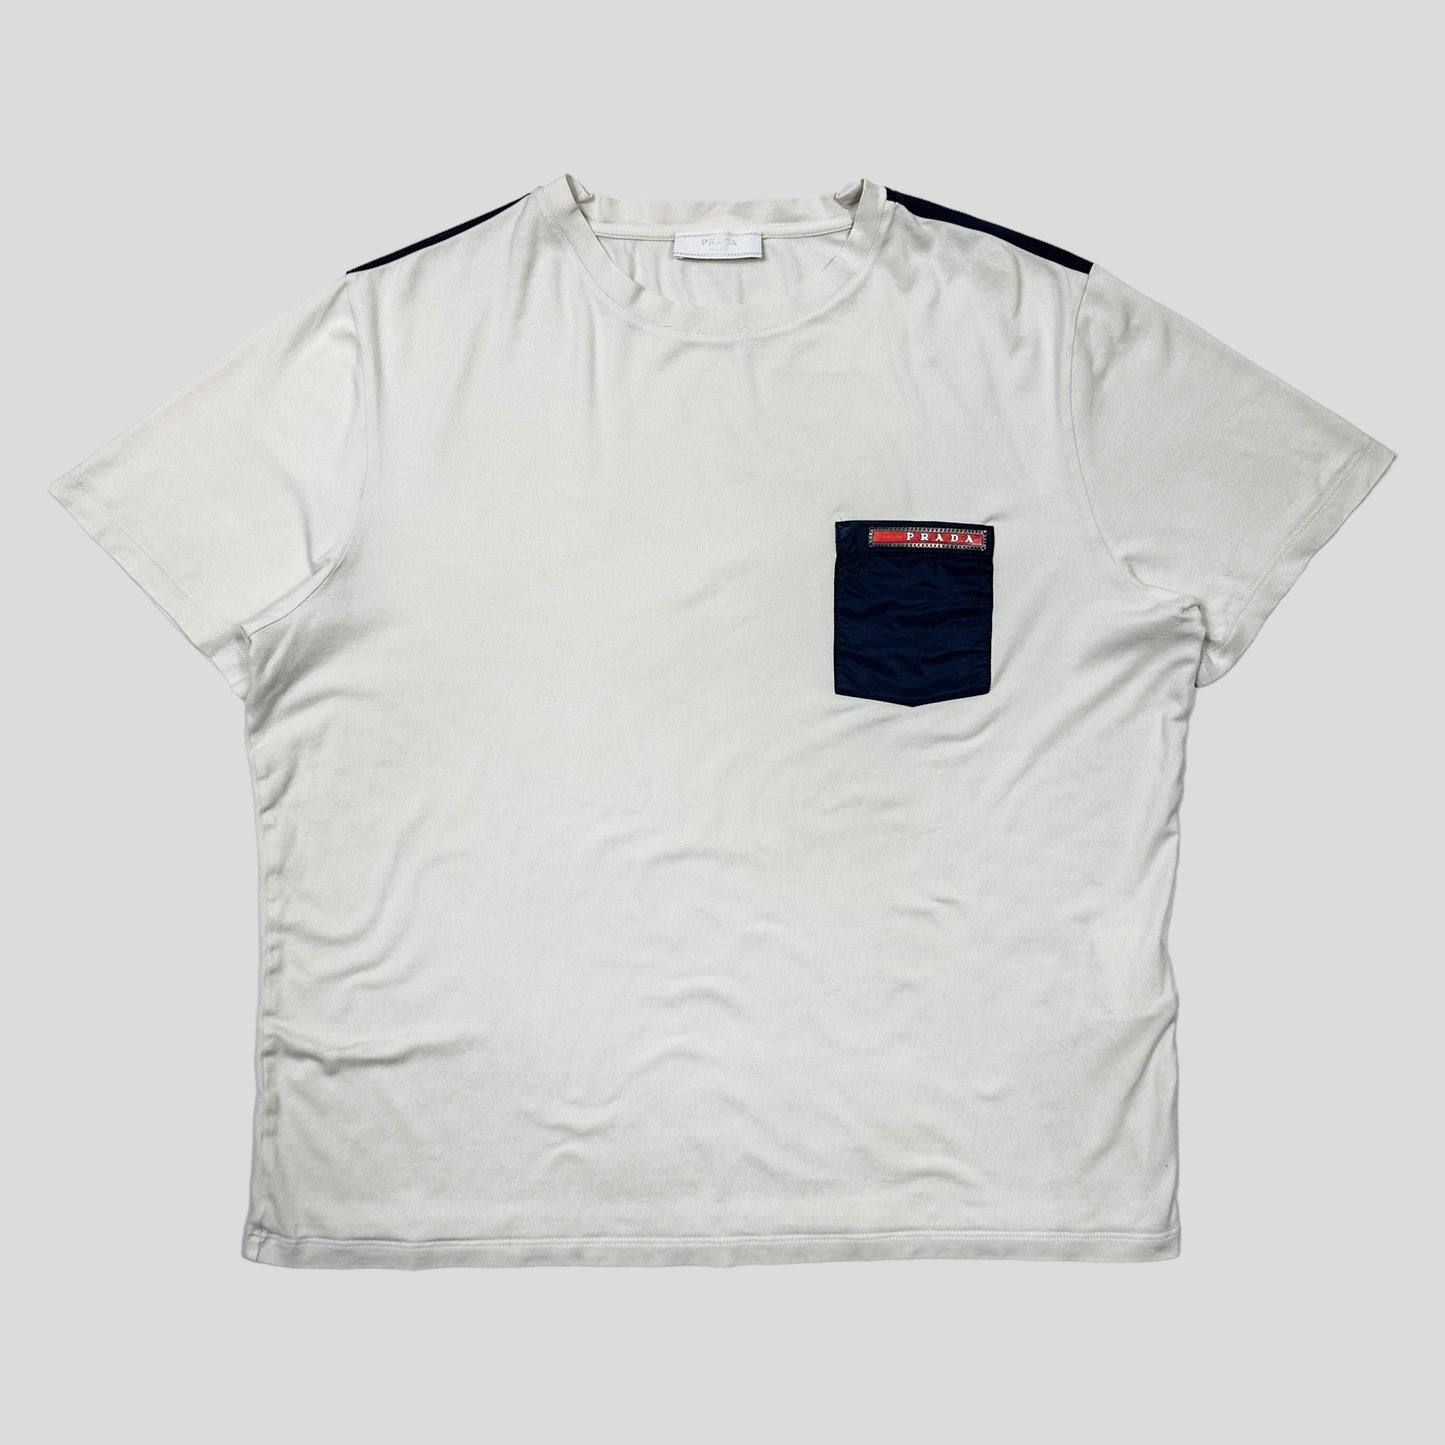 Prada Milano 2017 Nylon Pocket T-shirt - M/L - Known Source